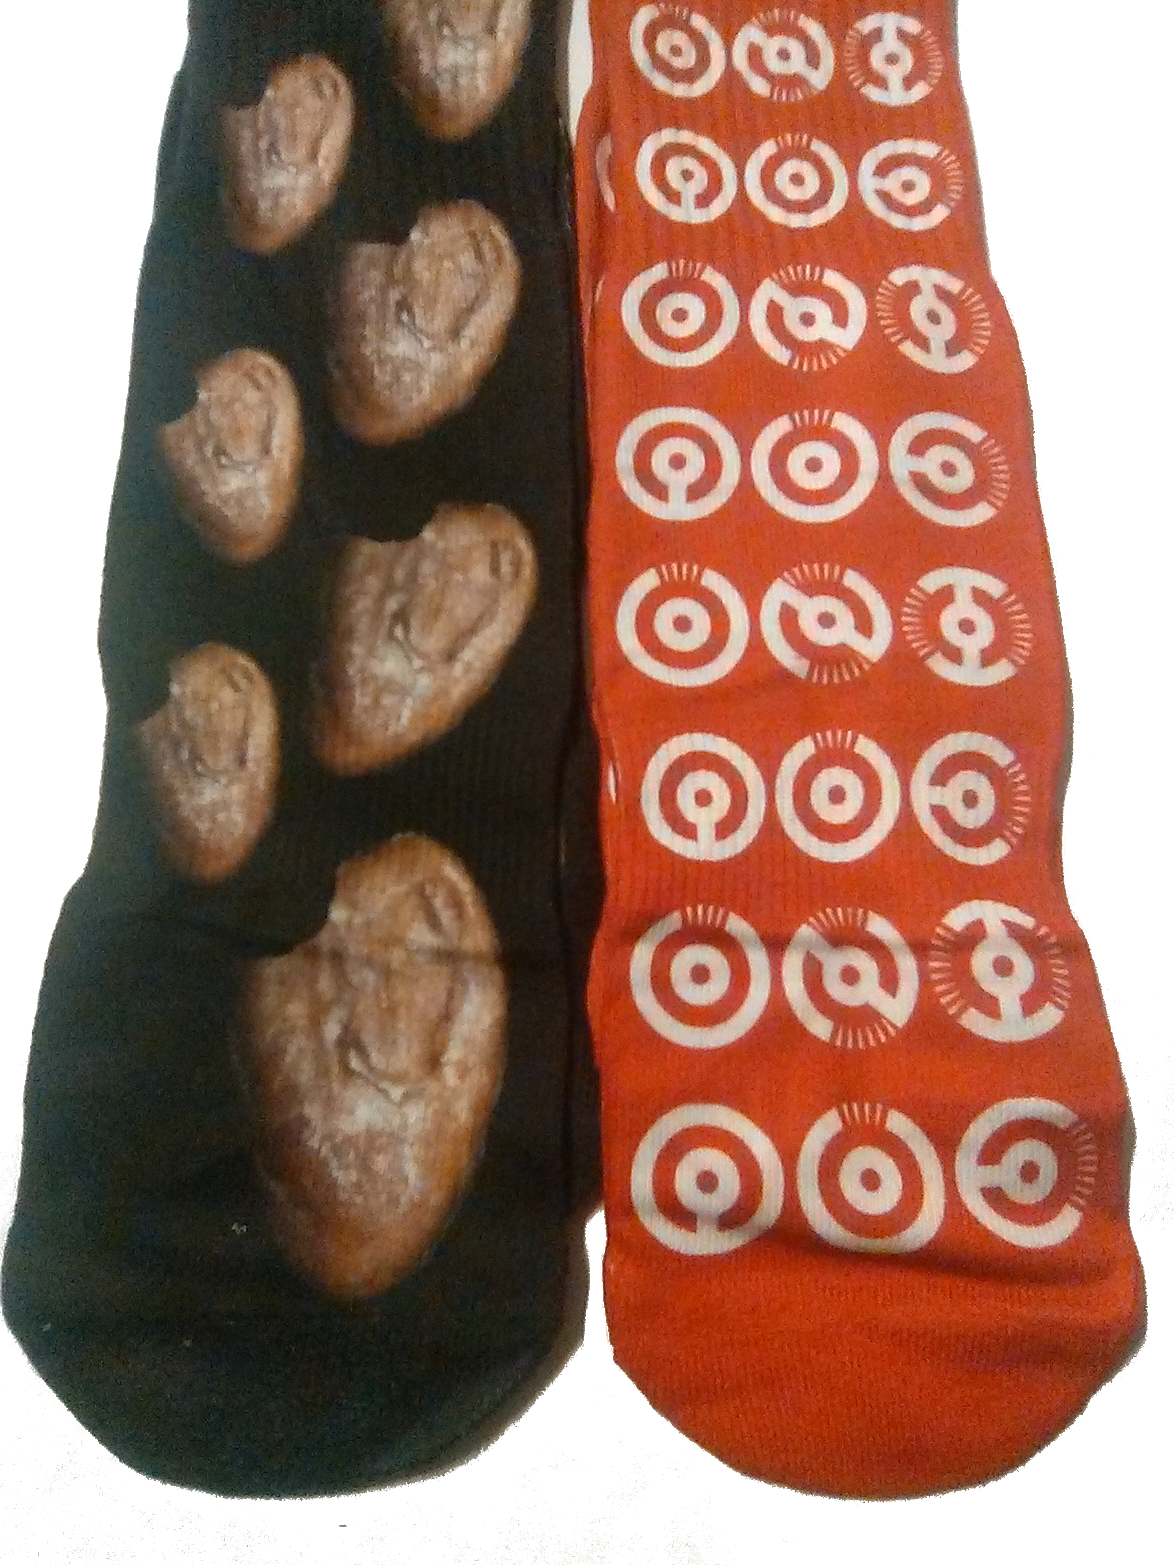 Motsu socks with honey buns and the Unique album art